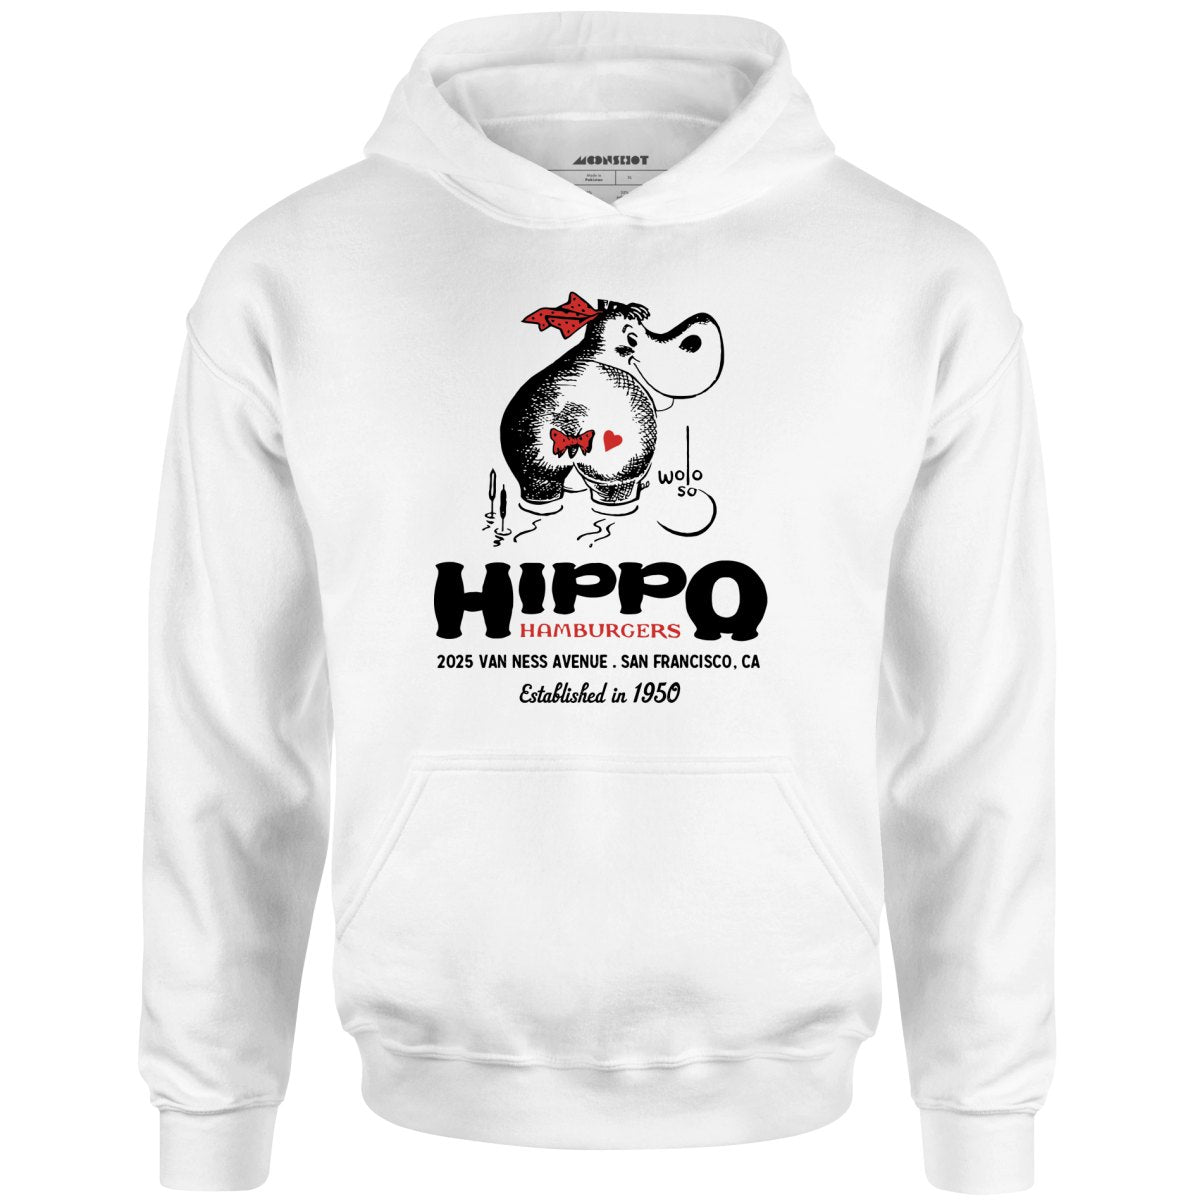 Hippo Hamburgers - San Francisco, CA - Vintage Restaurant - Unisex Hoodie